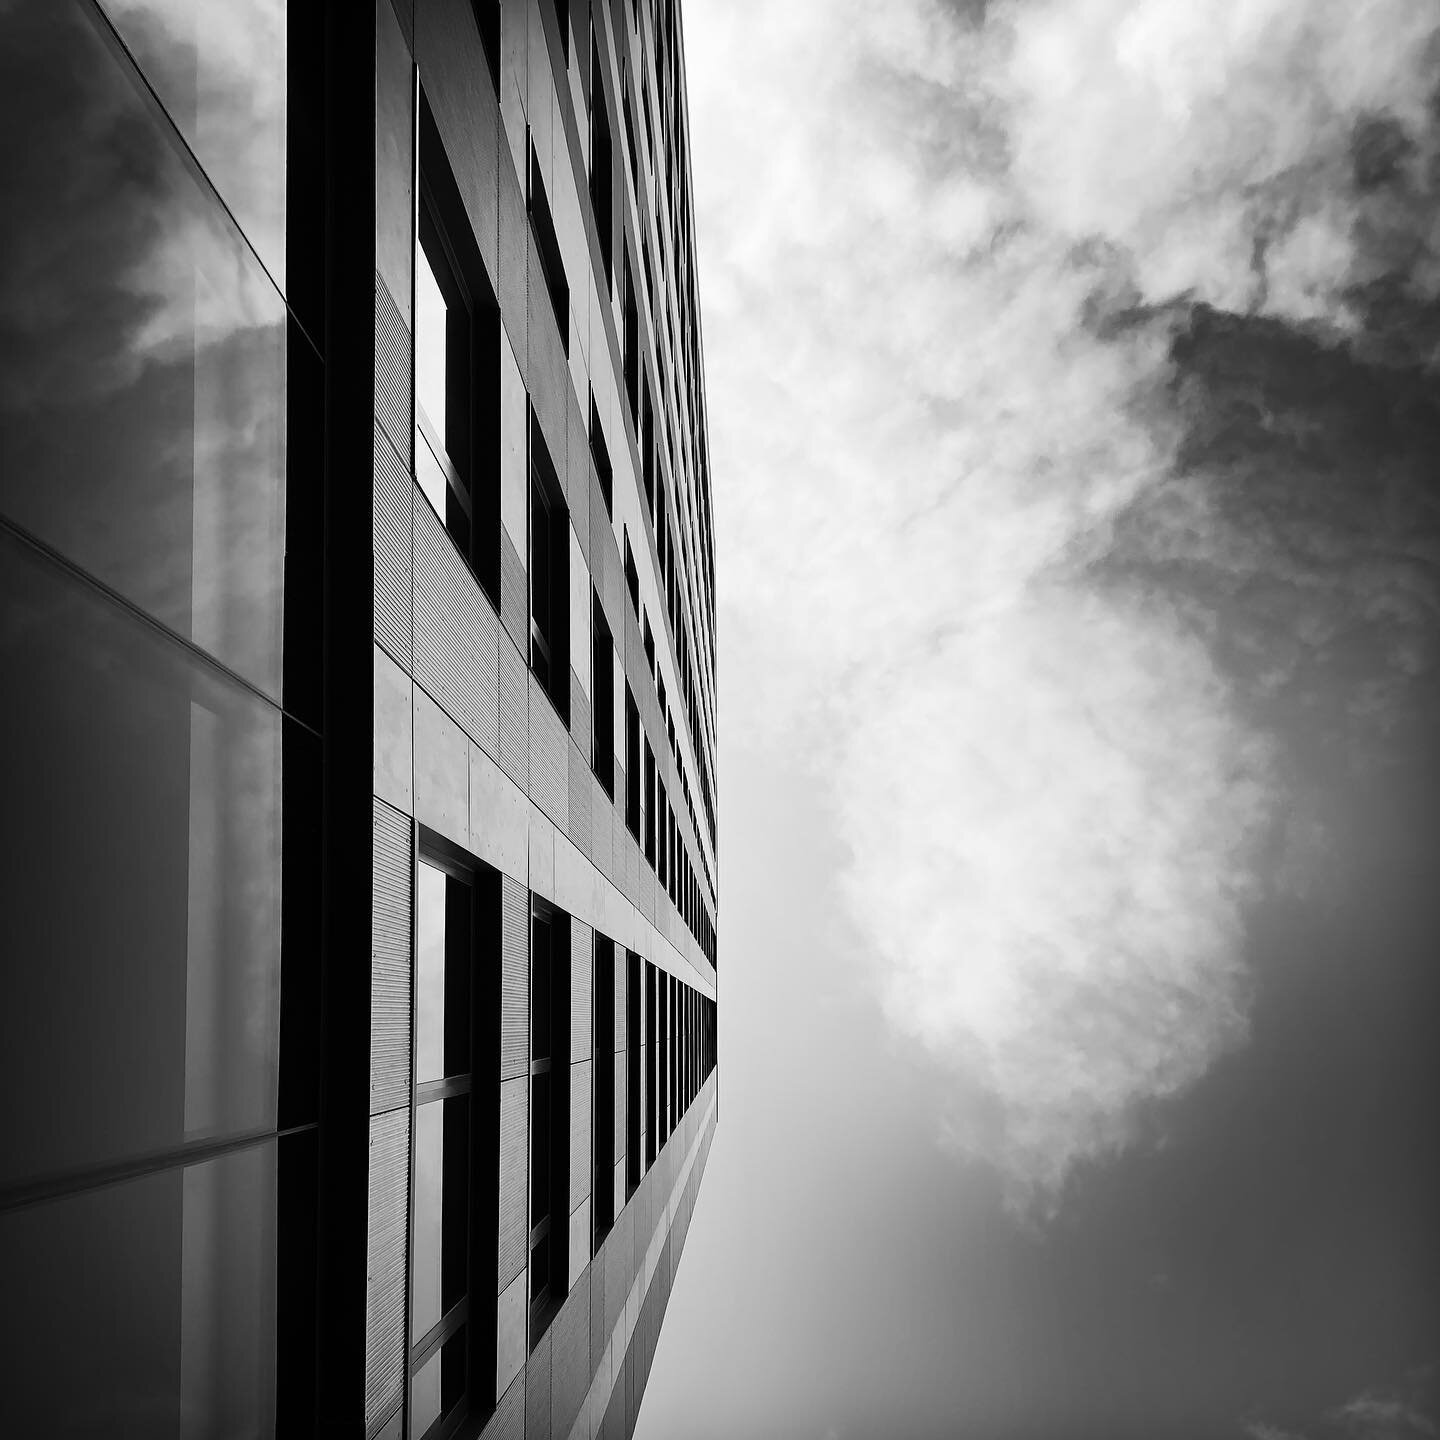 Skybound. #bwphotography #architecturephotography #abstractart #minimalist #perspective #perspectivephotography #iphonography #shotoniphone #hipstamatic #portlandoregon